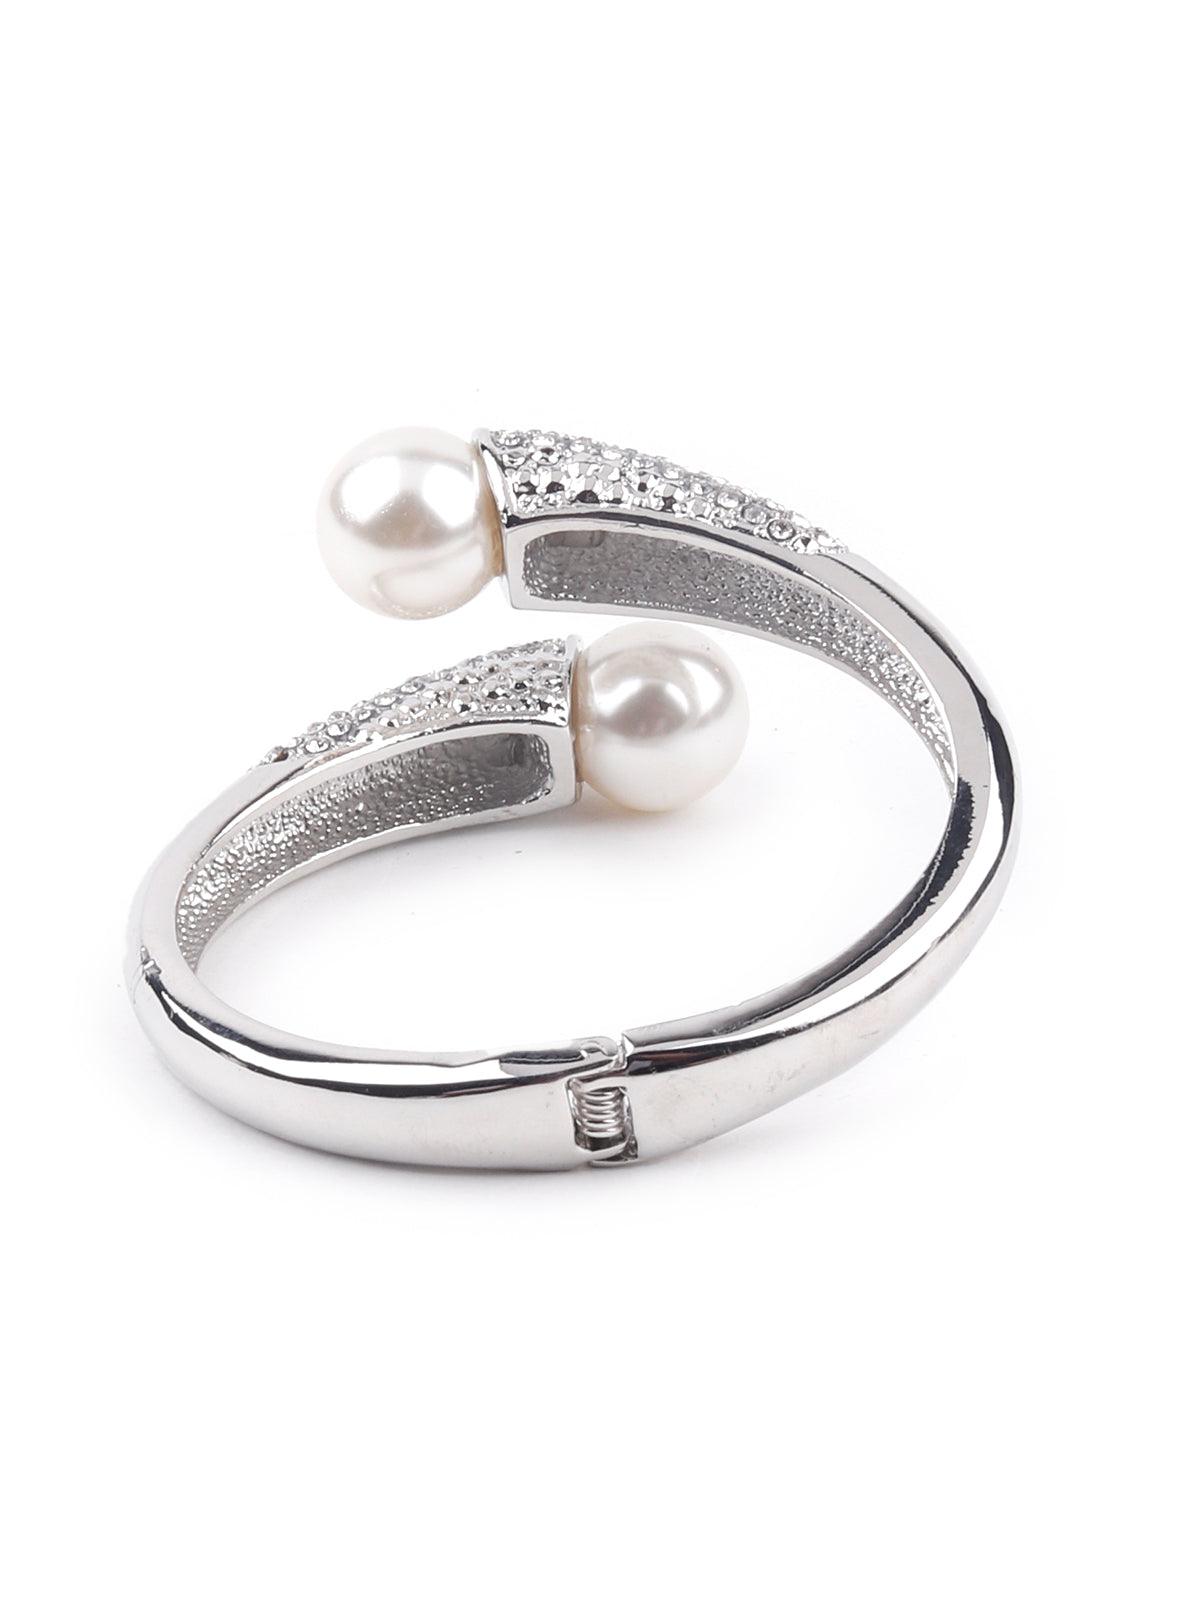 Silver-studded Kada bracelet for women - Odette